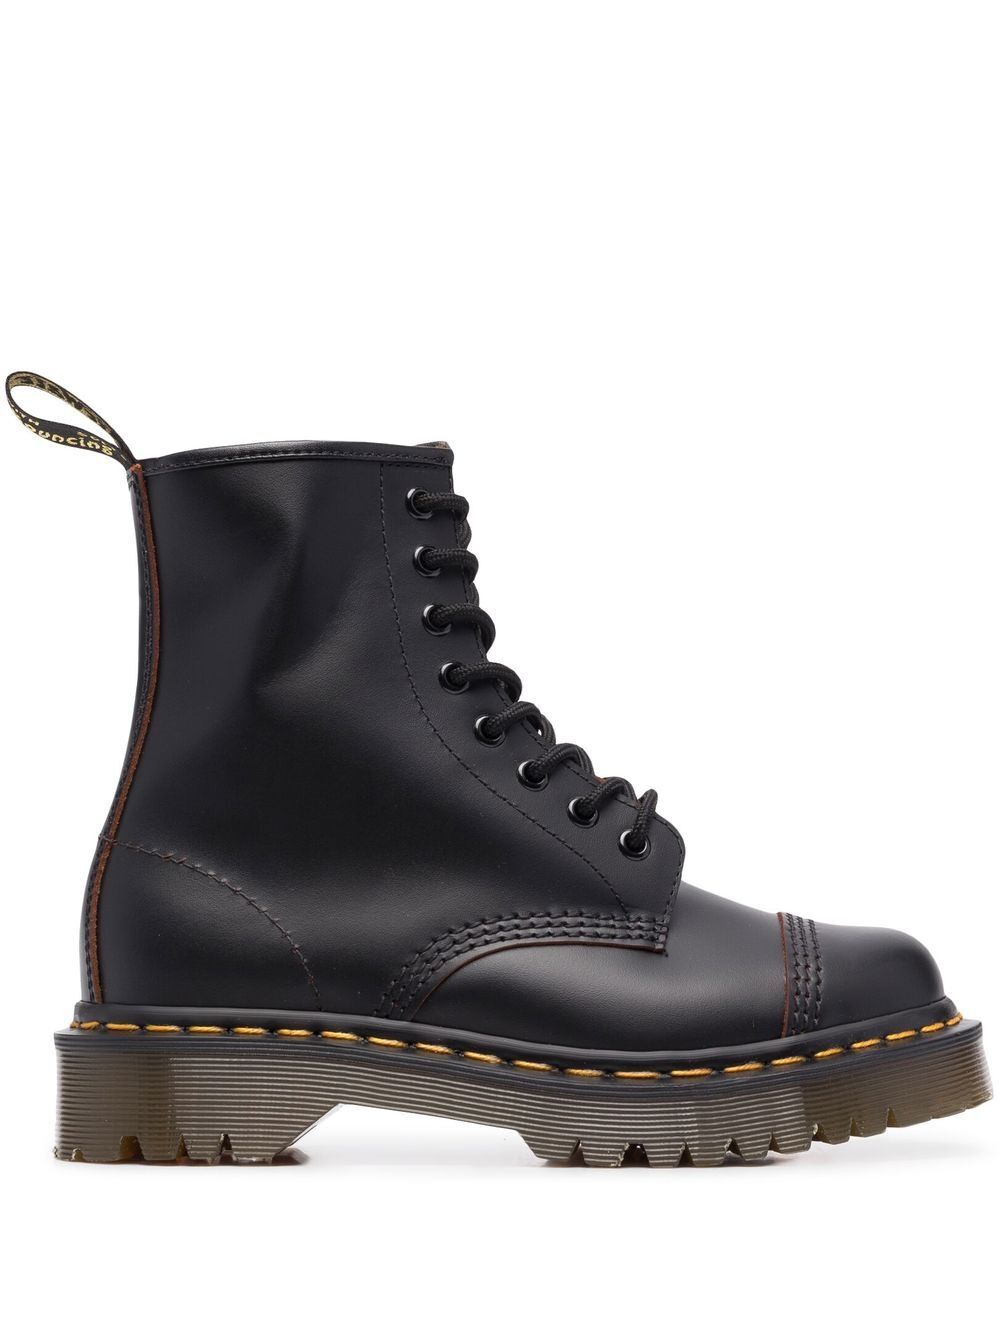 Dr. Martens 1460 Bex ankle boots - Black